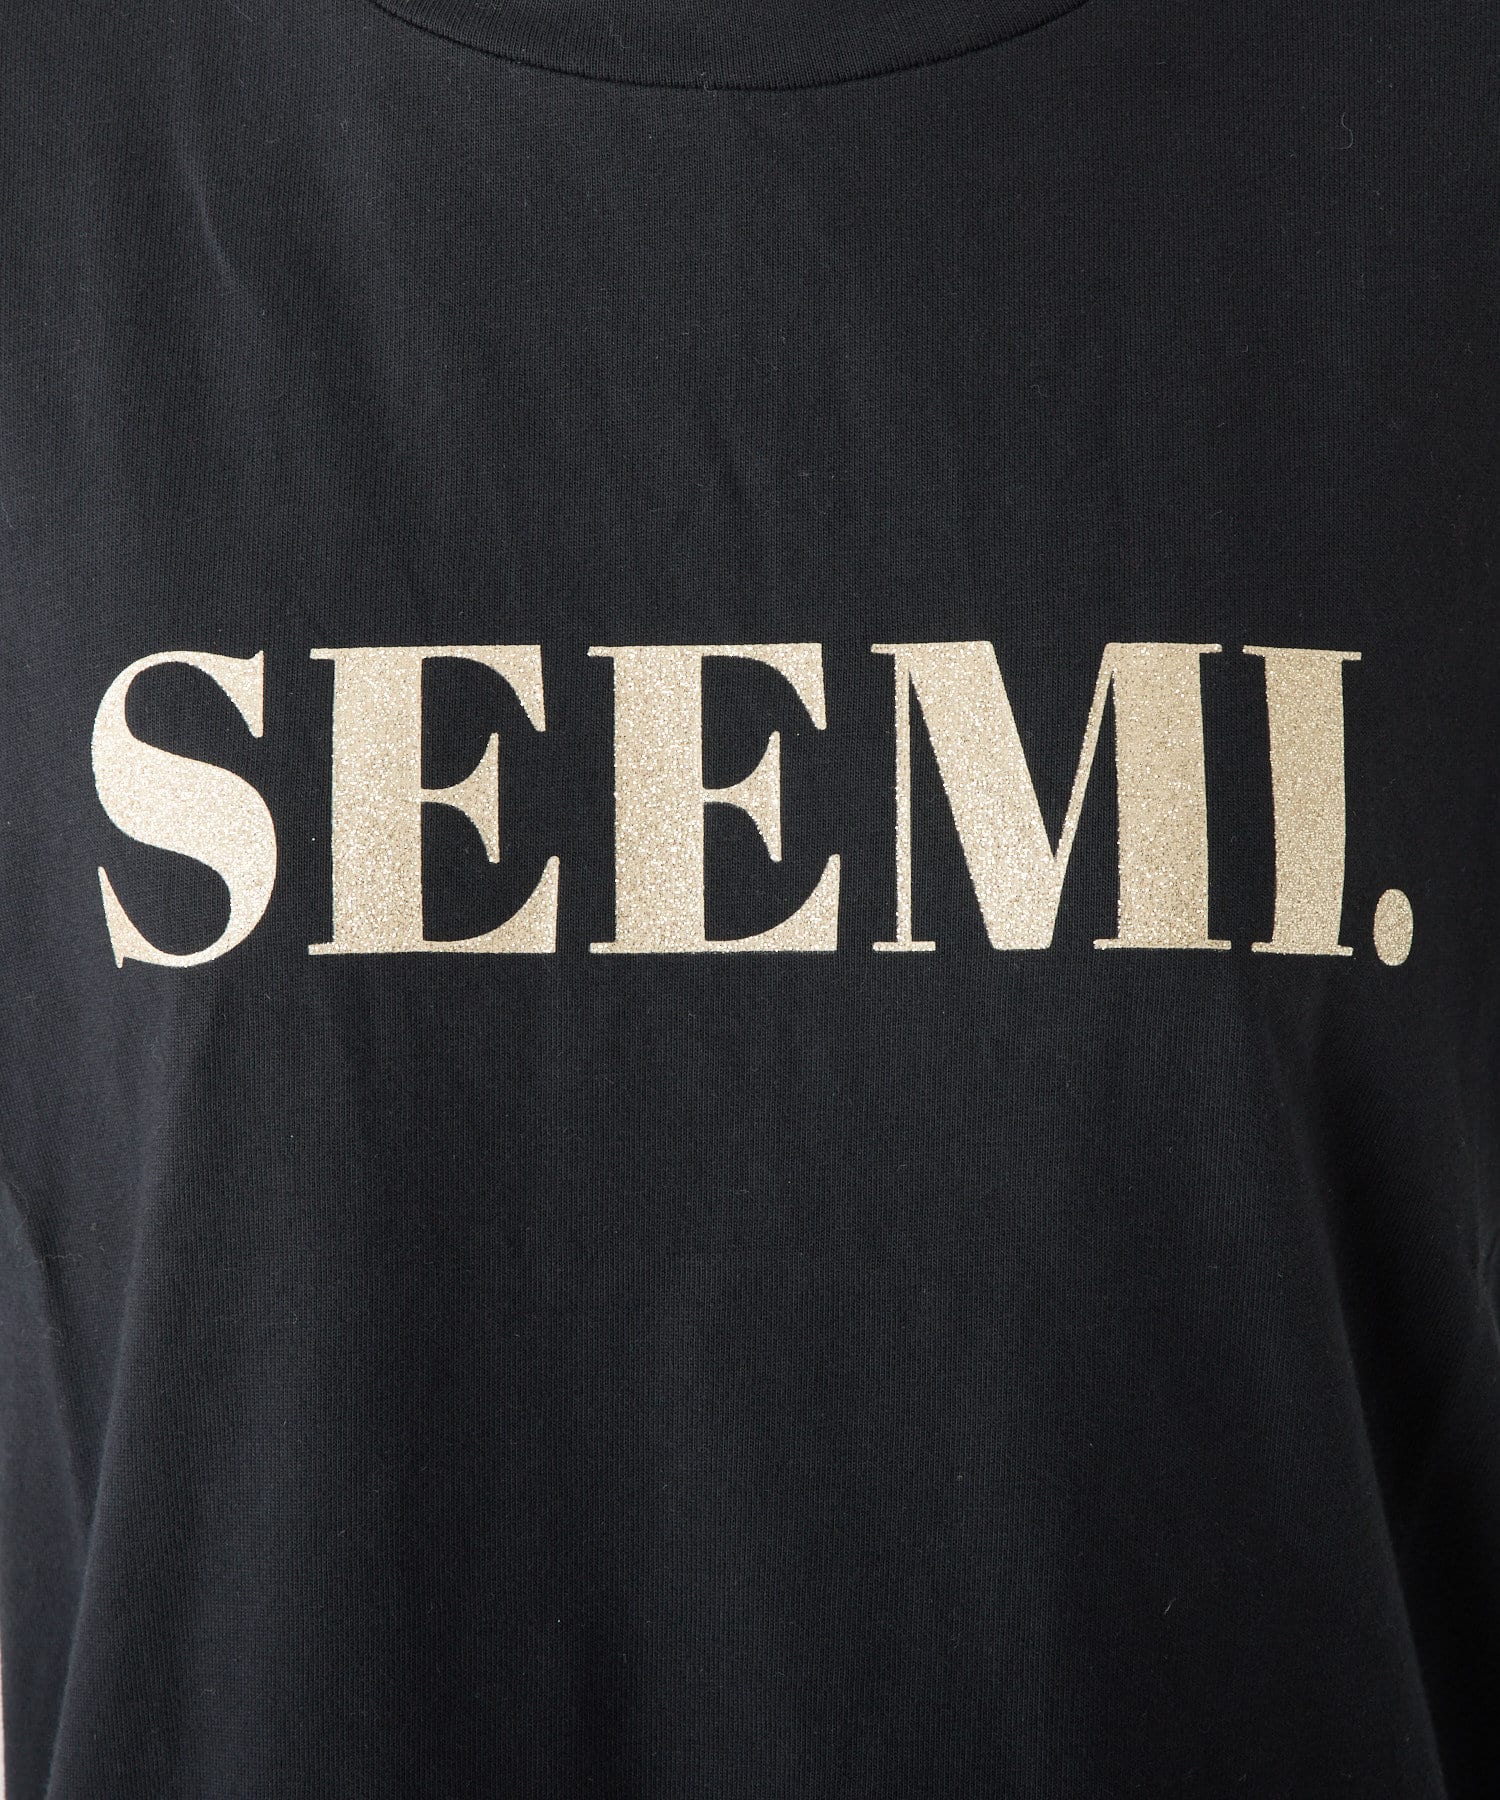 Seemi.by NICE CLAUP(シーミーバイナイスクラップ) 【ベストセラーアイテム】Seemi.T